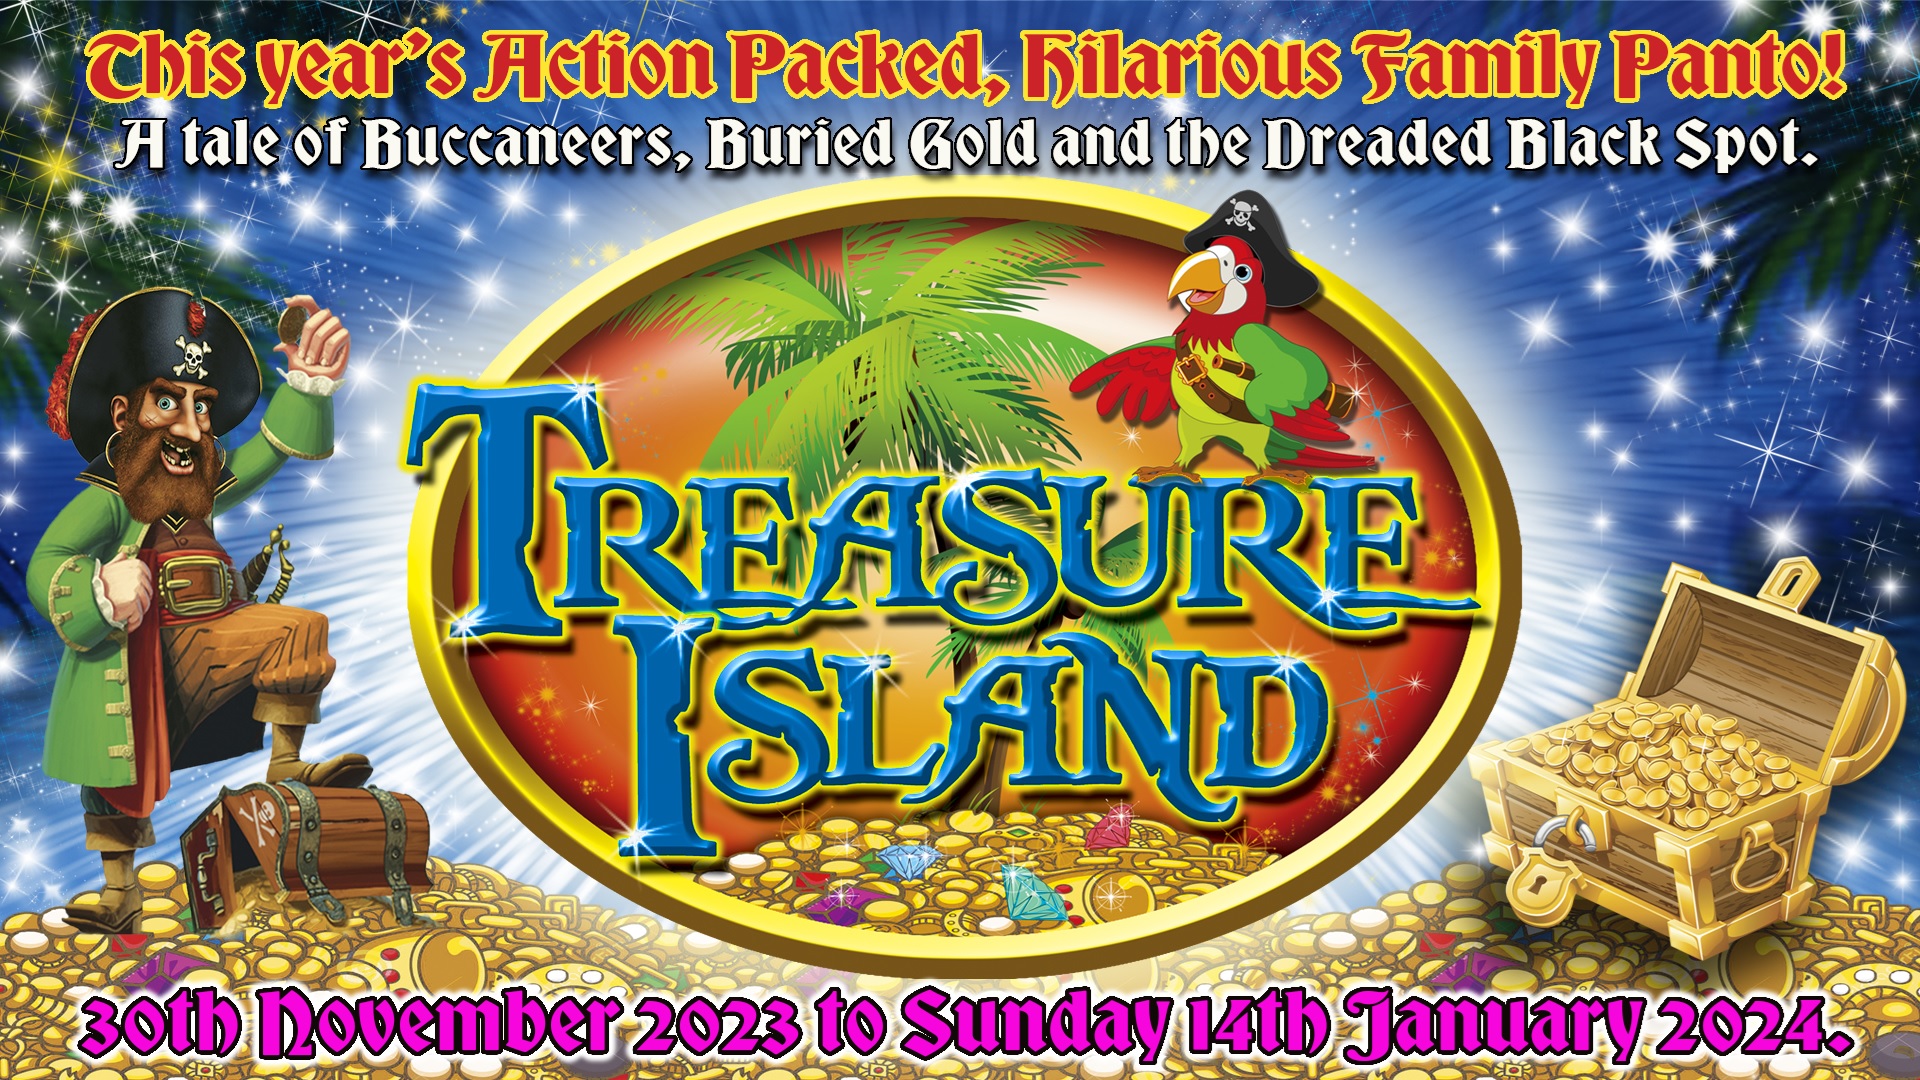 Treasure Island Panto at the Pavilion Theatre, Glasgow